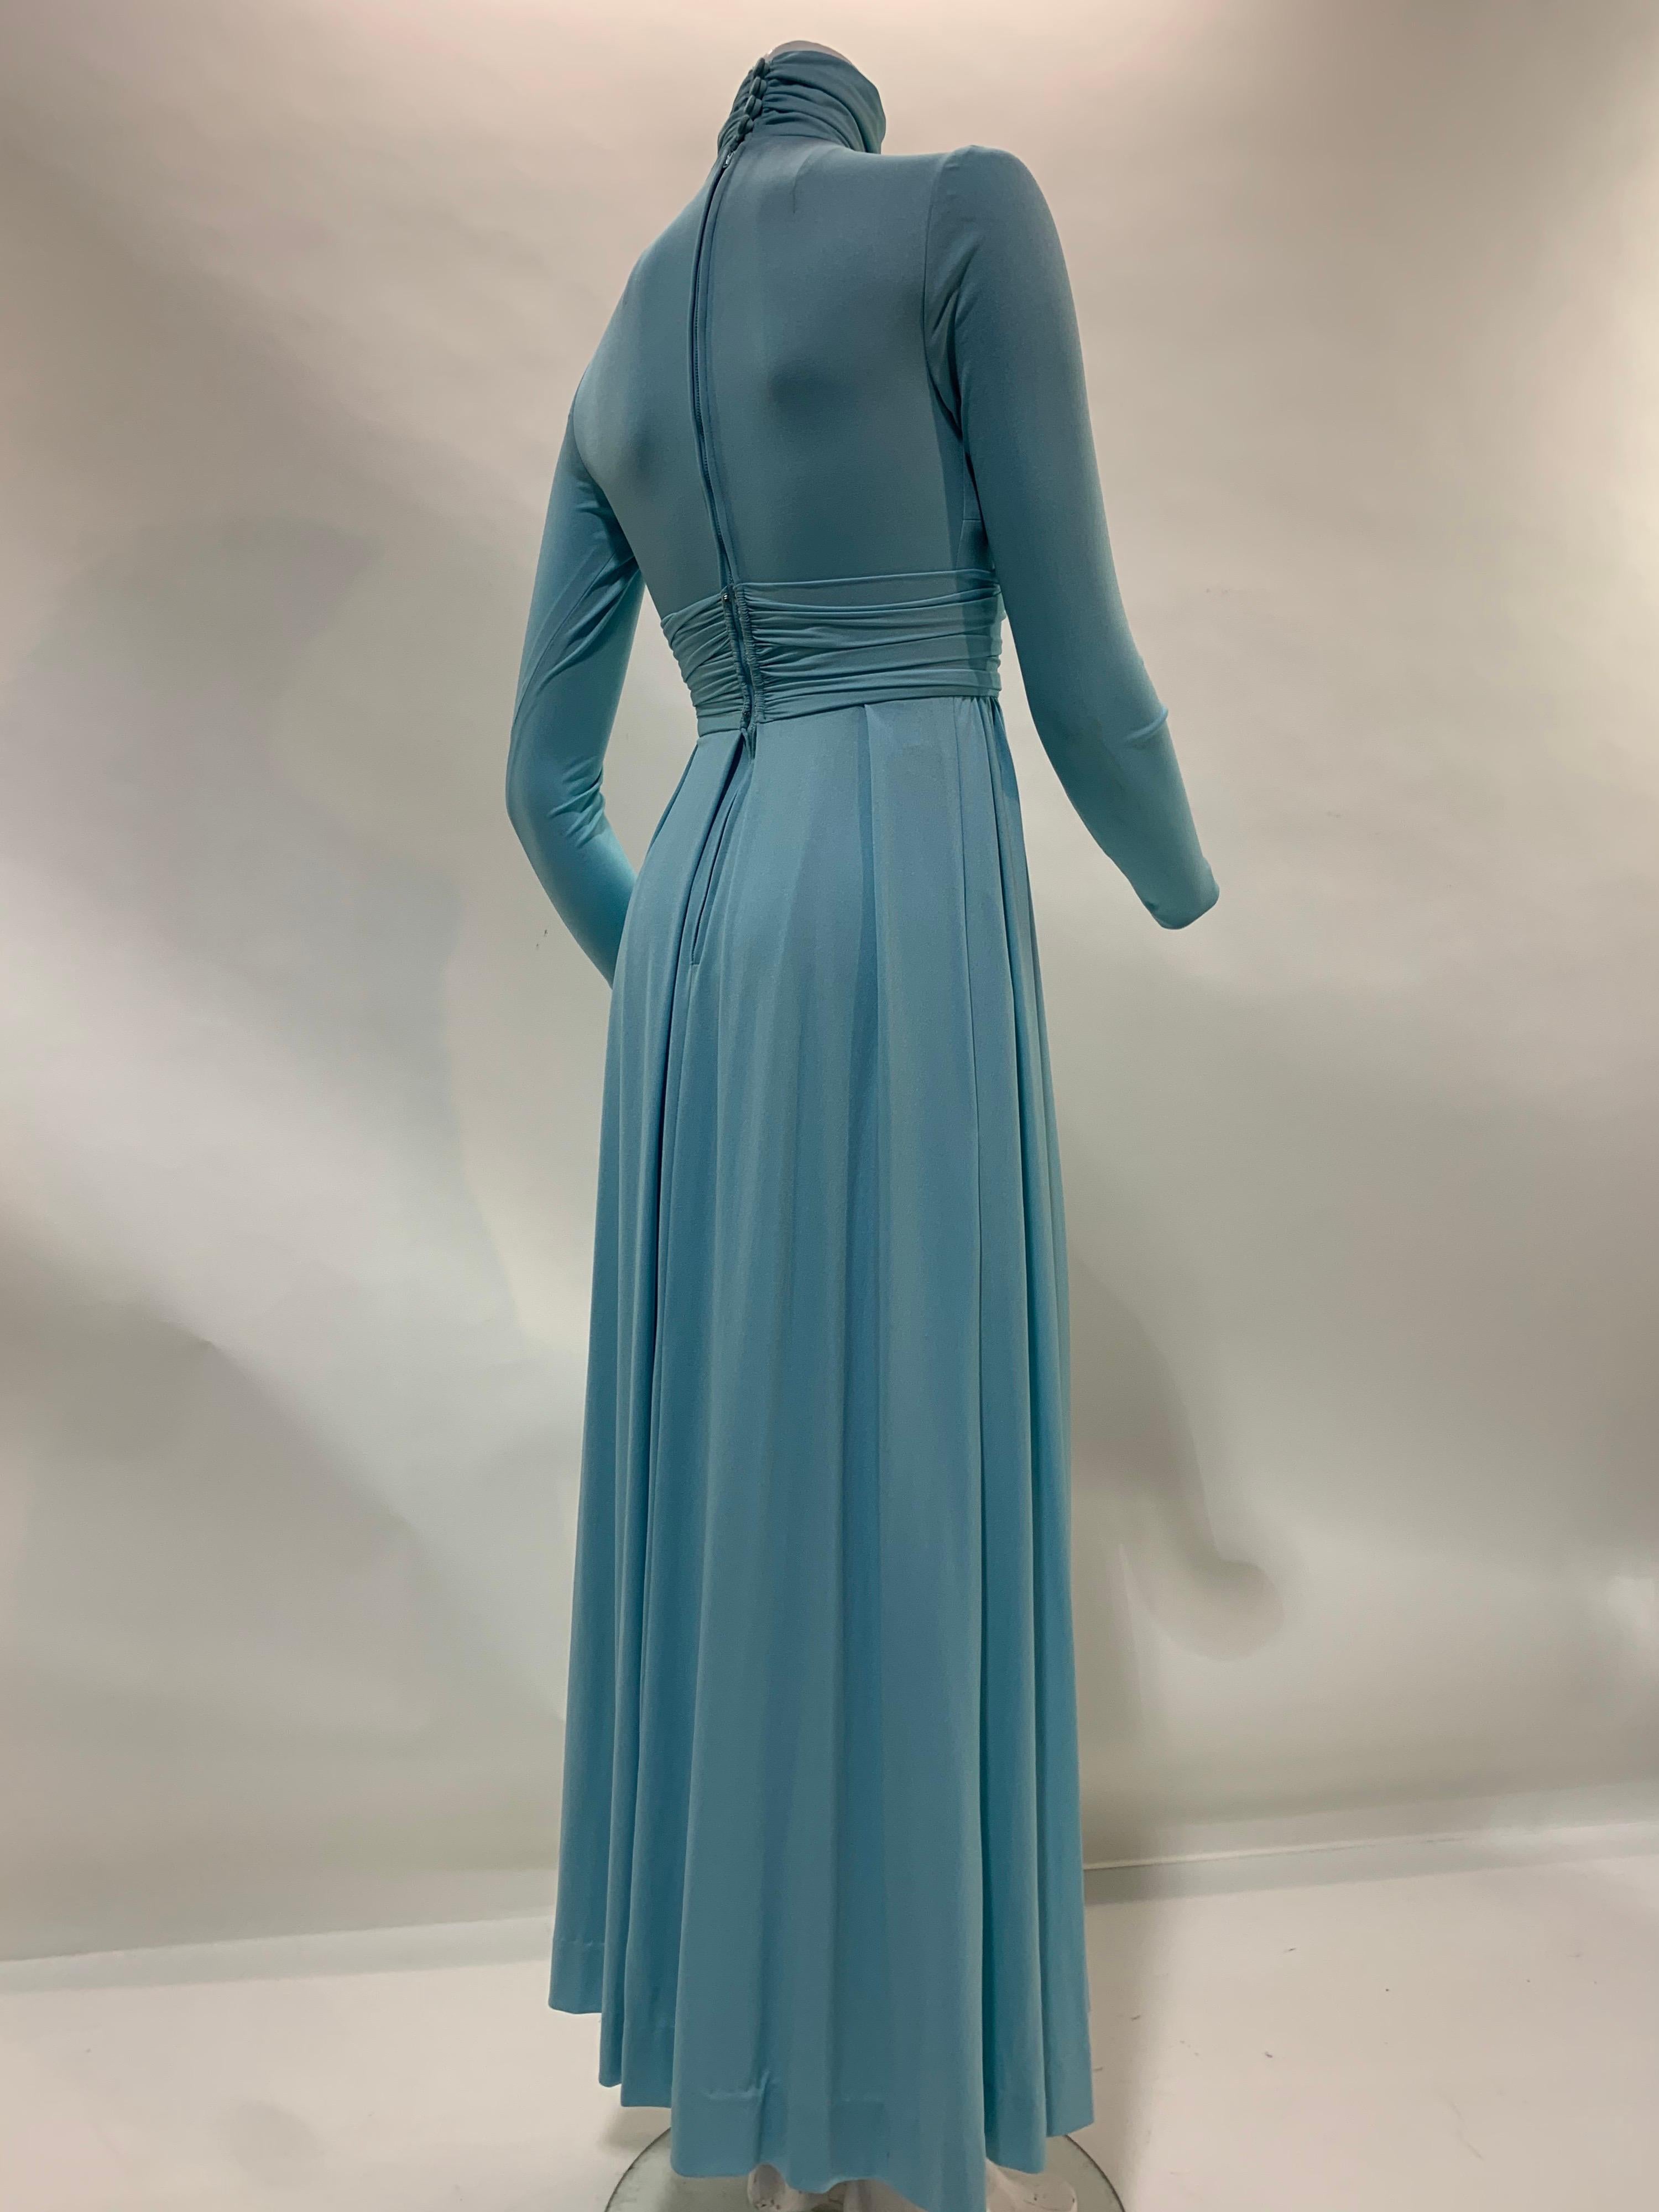 1970 Lillie Rubin Aquamarine Knit Maxi Dress w/ High Neck & Jeweled Centerpiece  For Sale 1